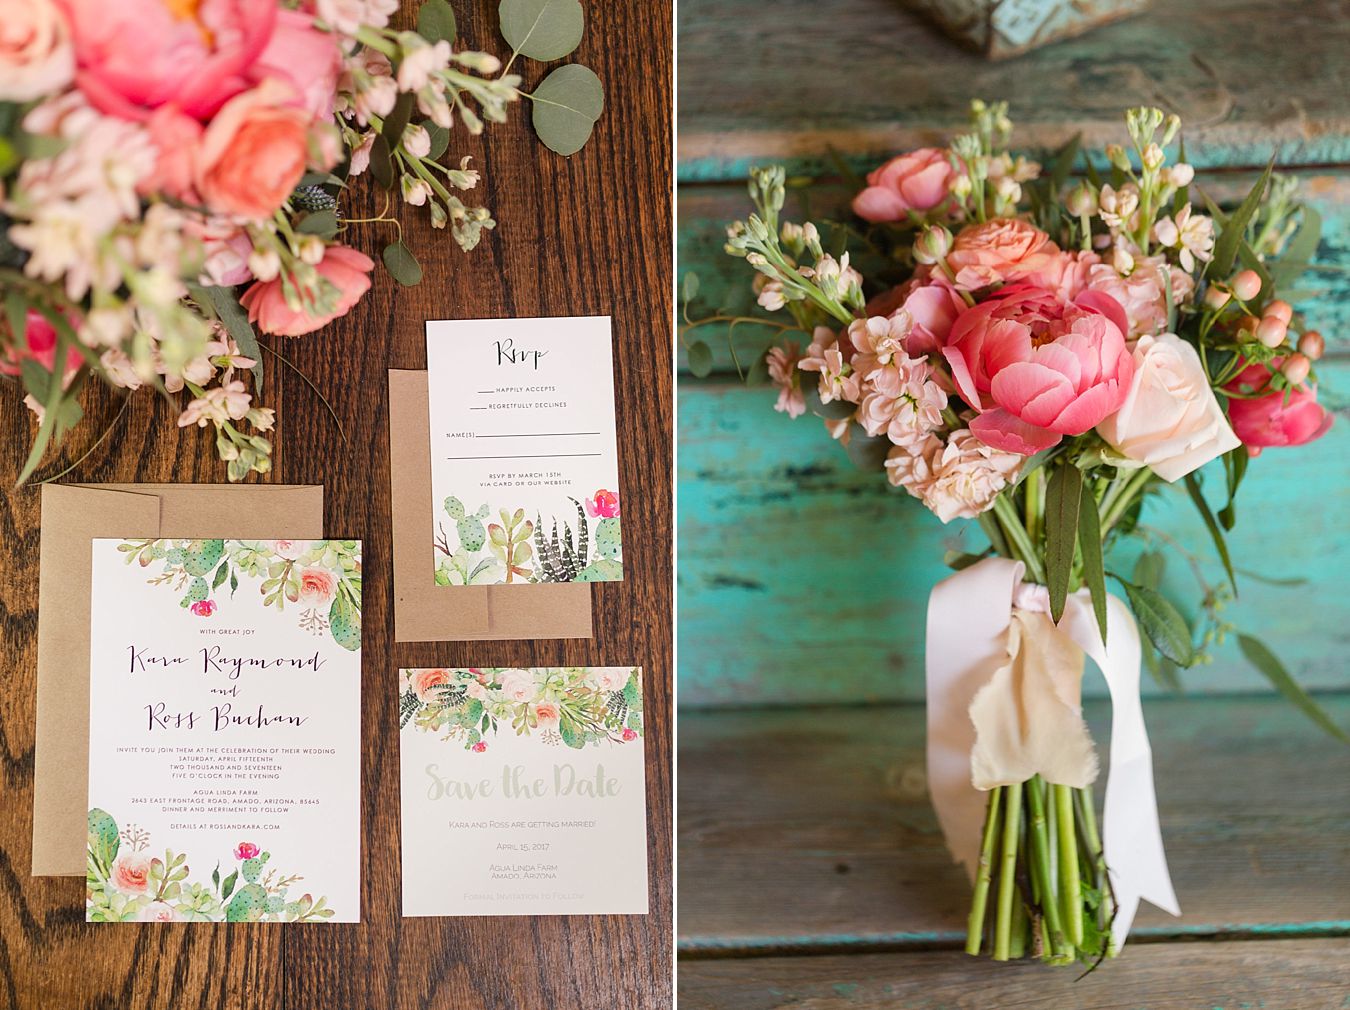 desert wedding invitations design, tucson florist, tucson wedding flowers, pink and coral wedding colors, wedding bouquet